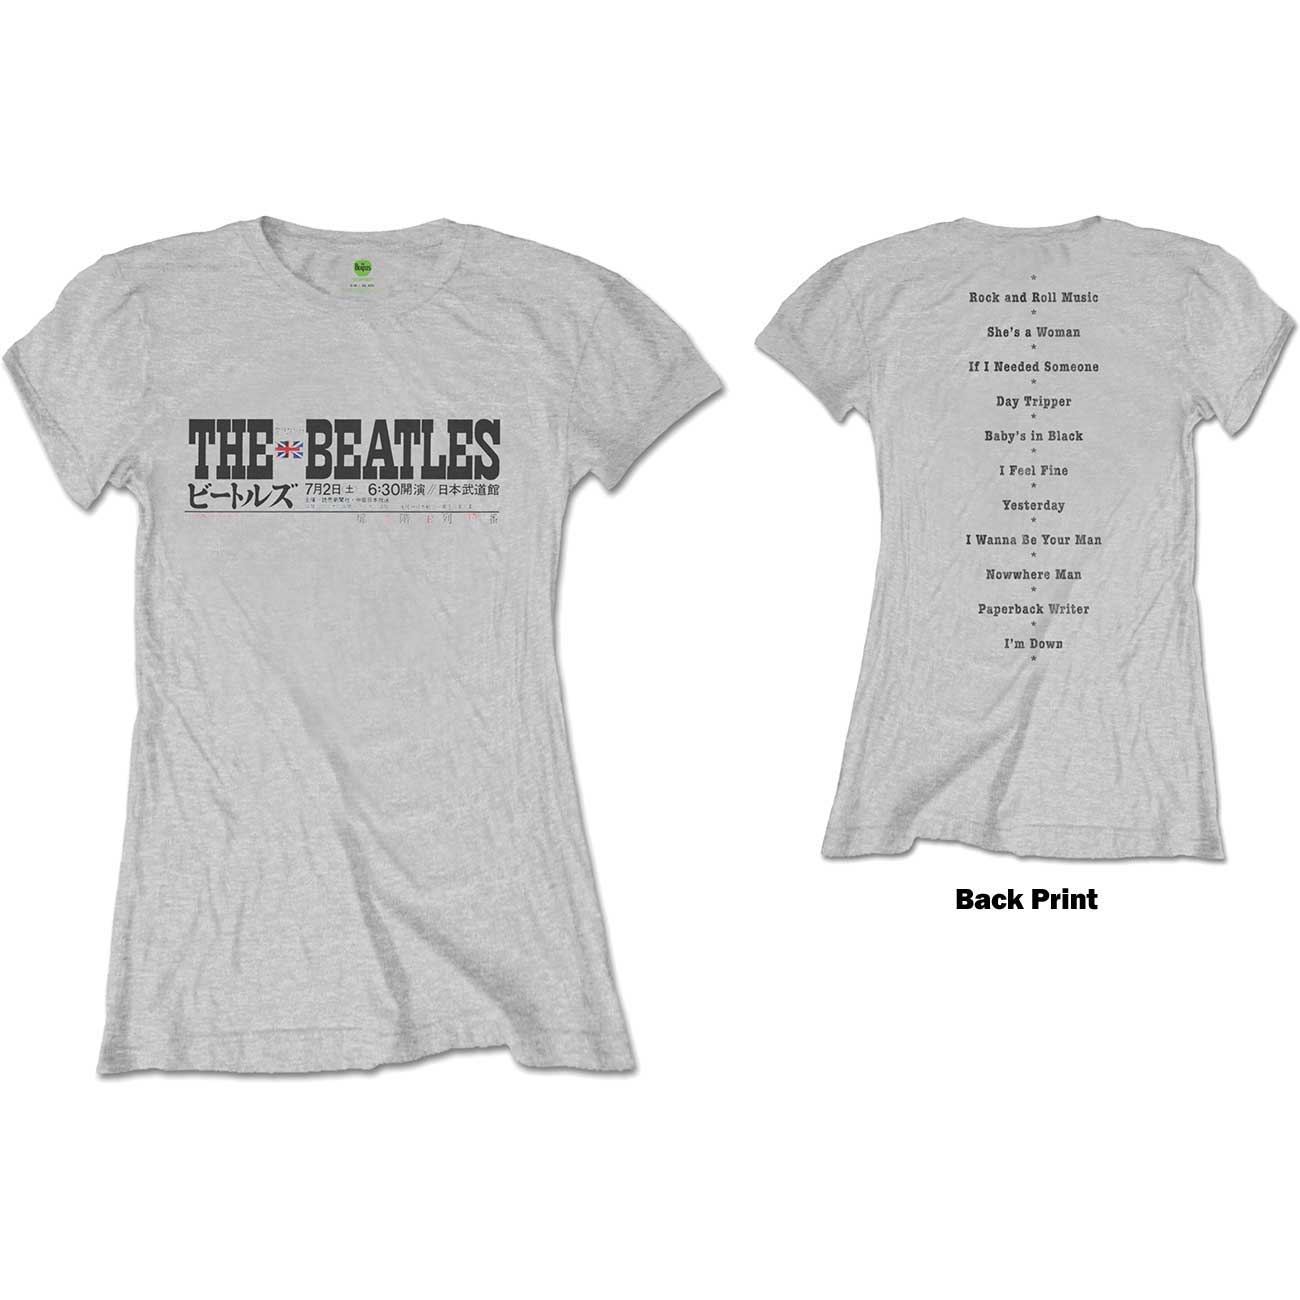 The Beatles Ladies T-Shirt: Budokan Set List (Back Print)